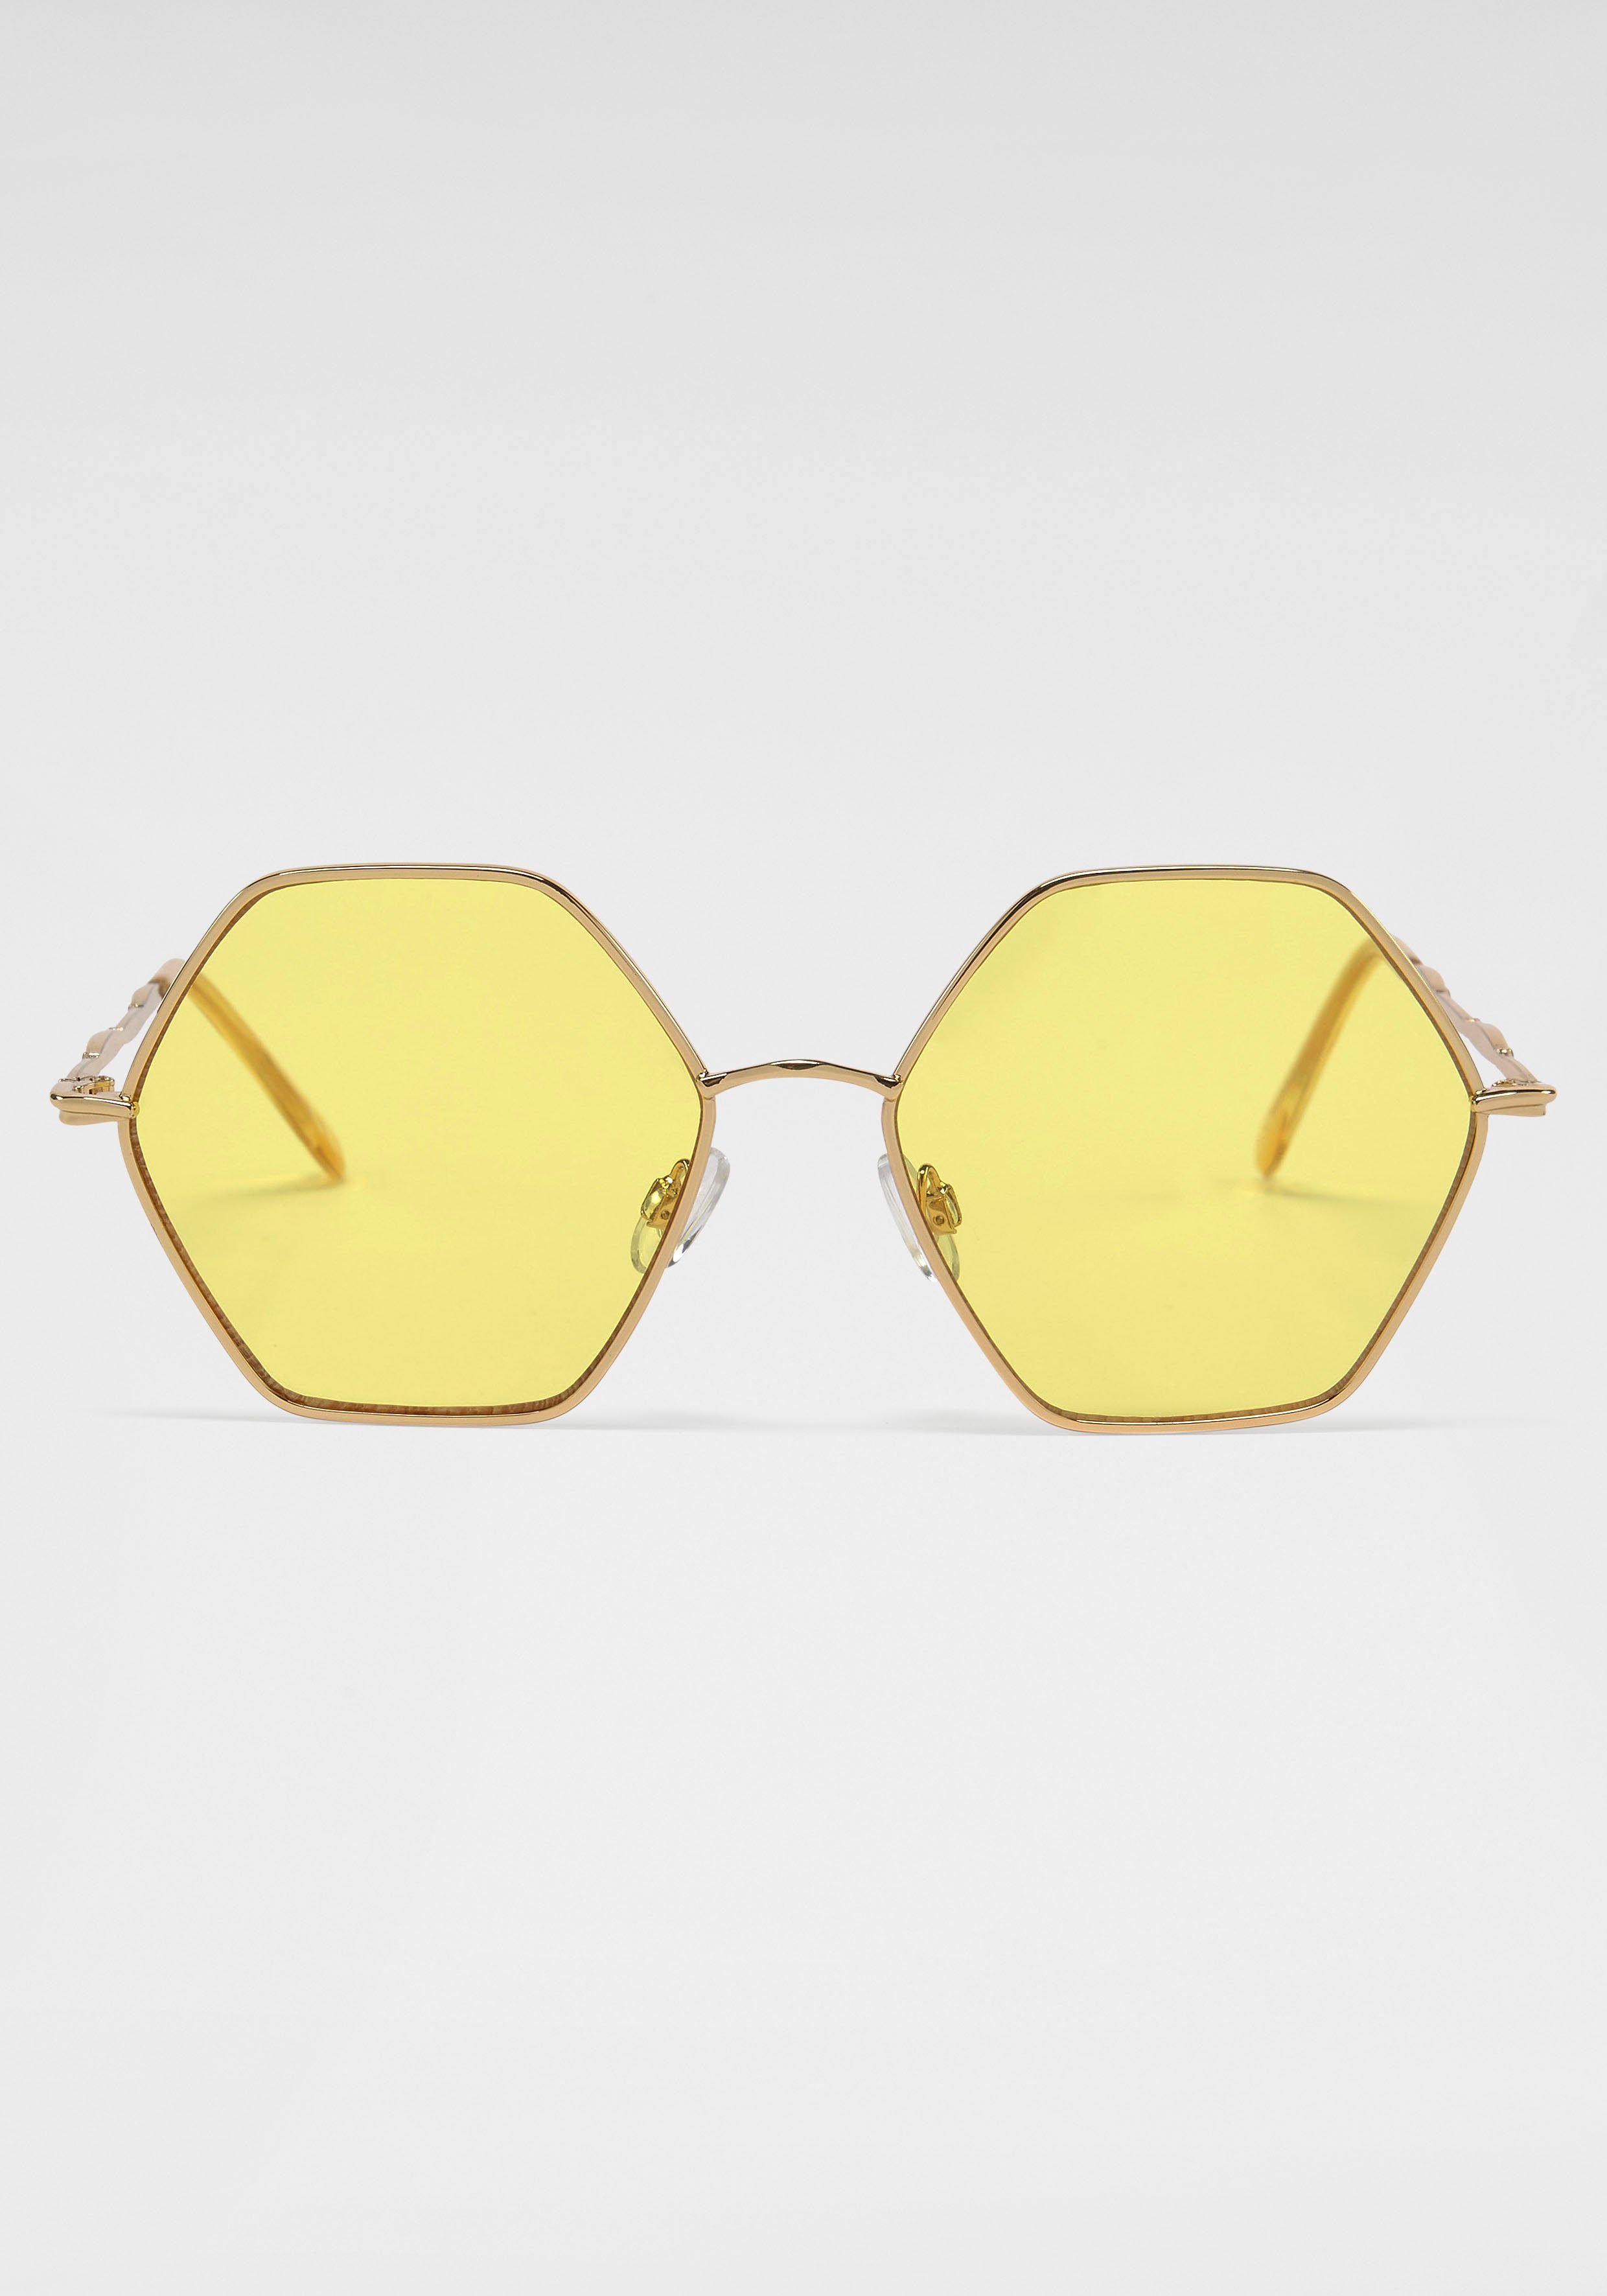 SPIRIT YOUNG gelb LONDON Eyewear Sonnenbrille